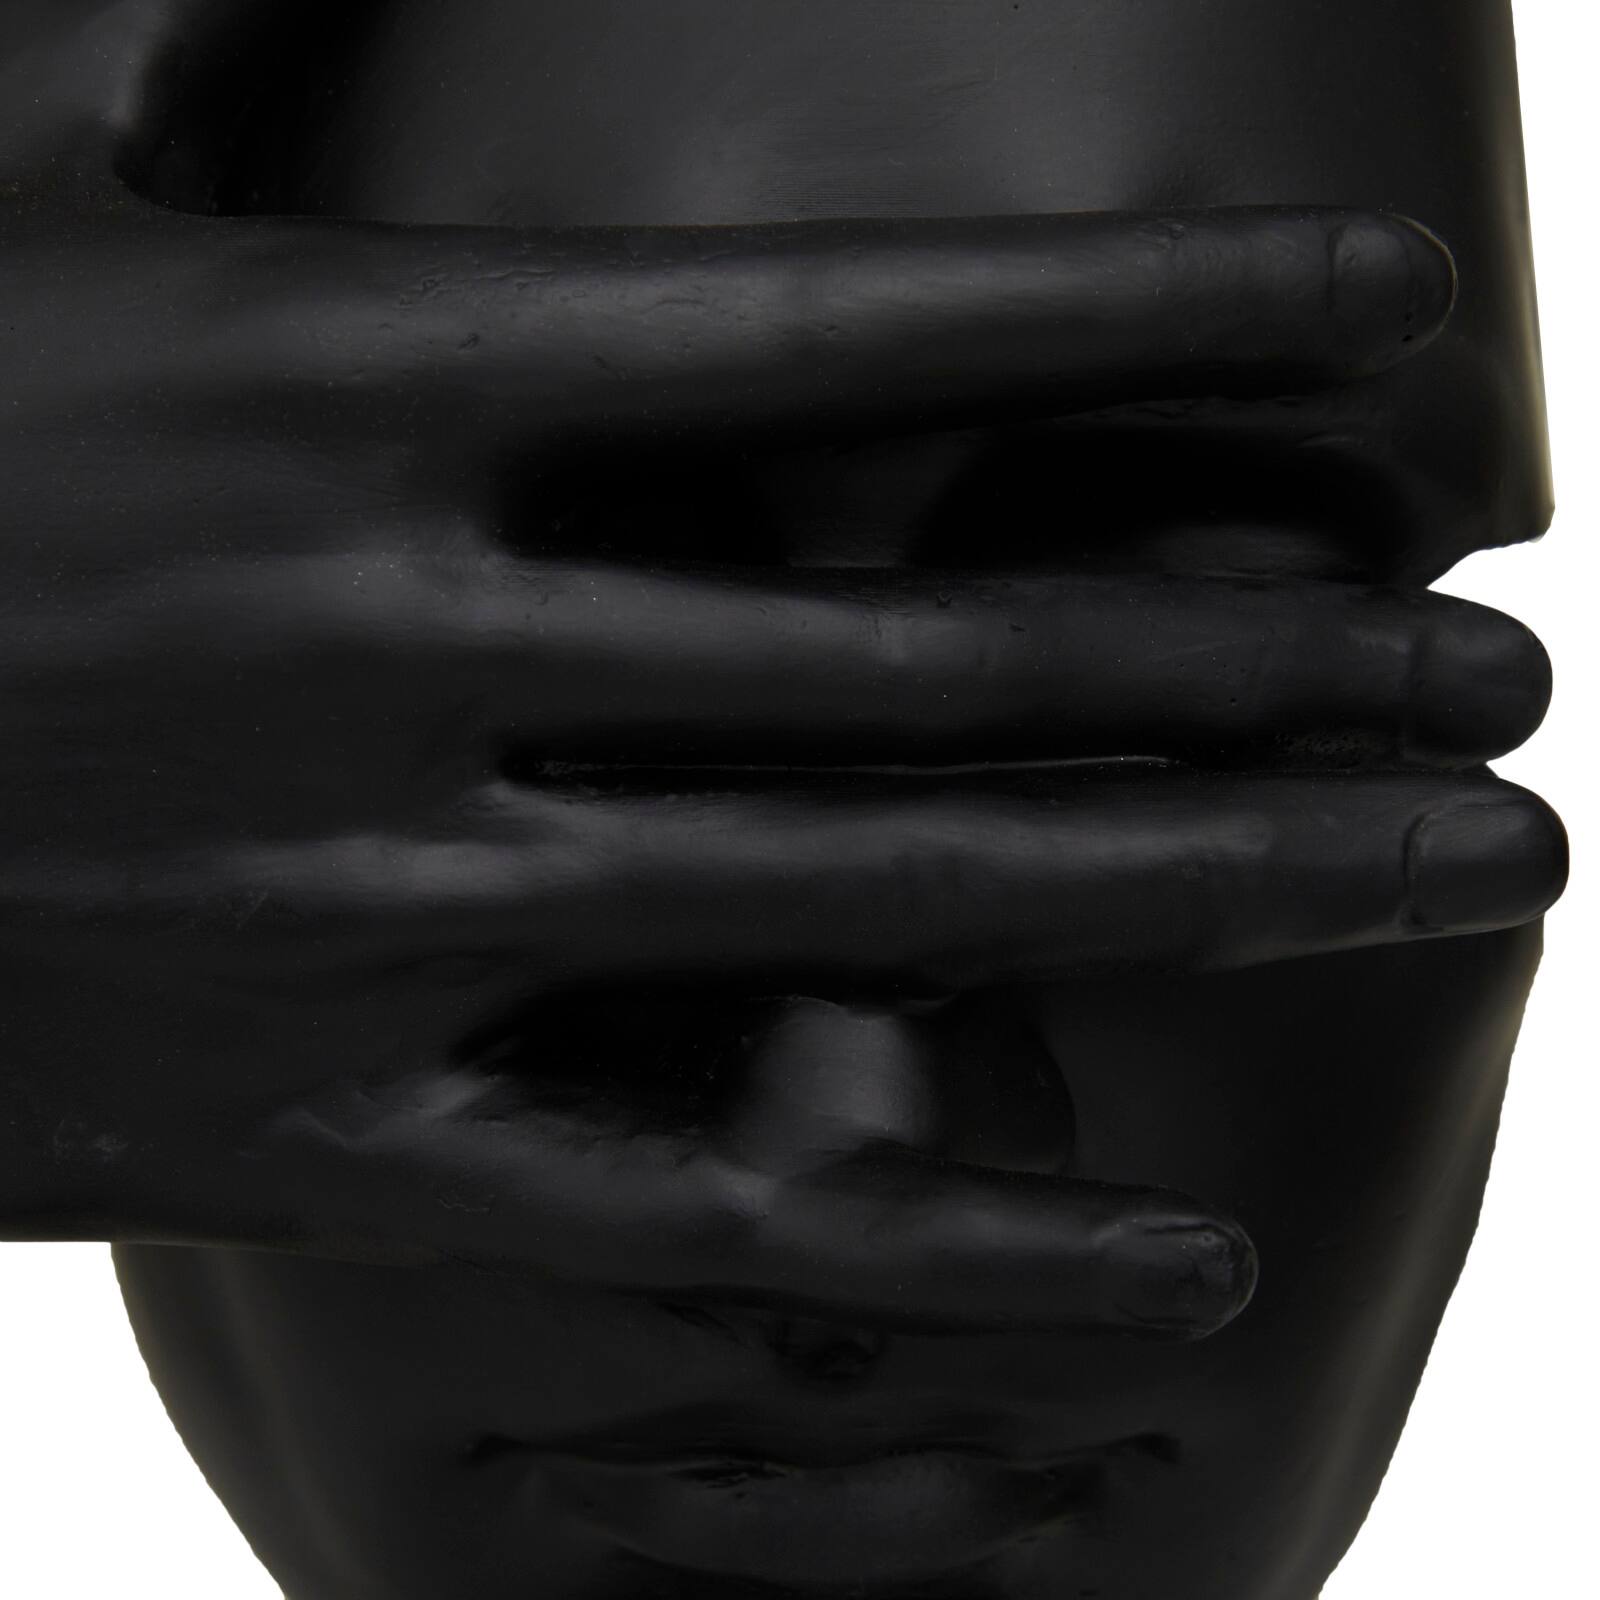 The Novogratz Black Polystone Face Sculpture Set